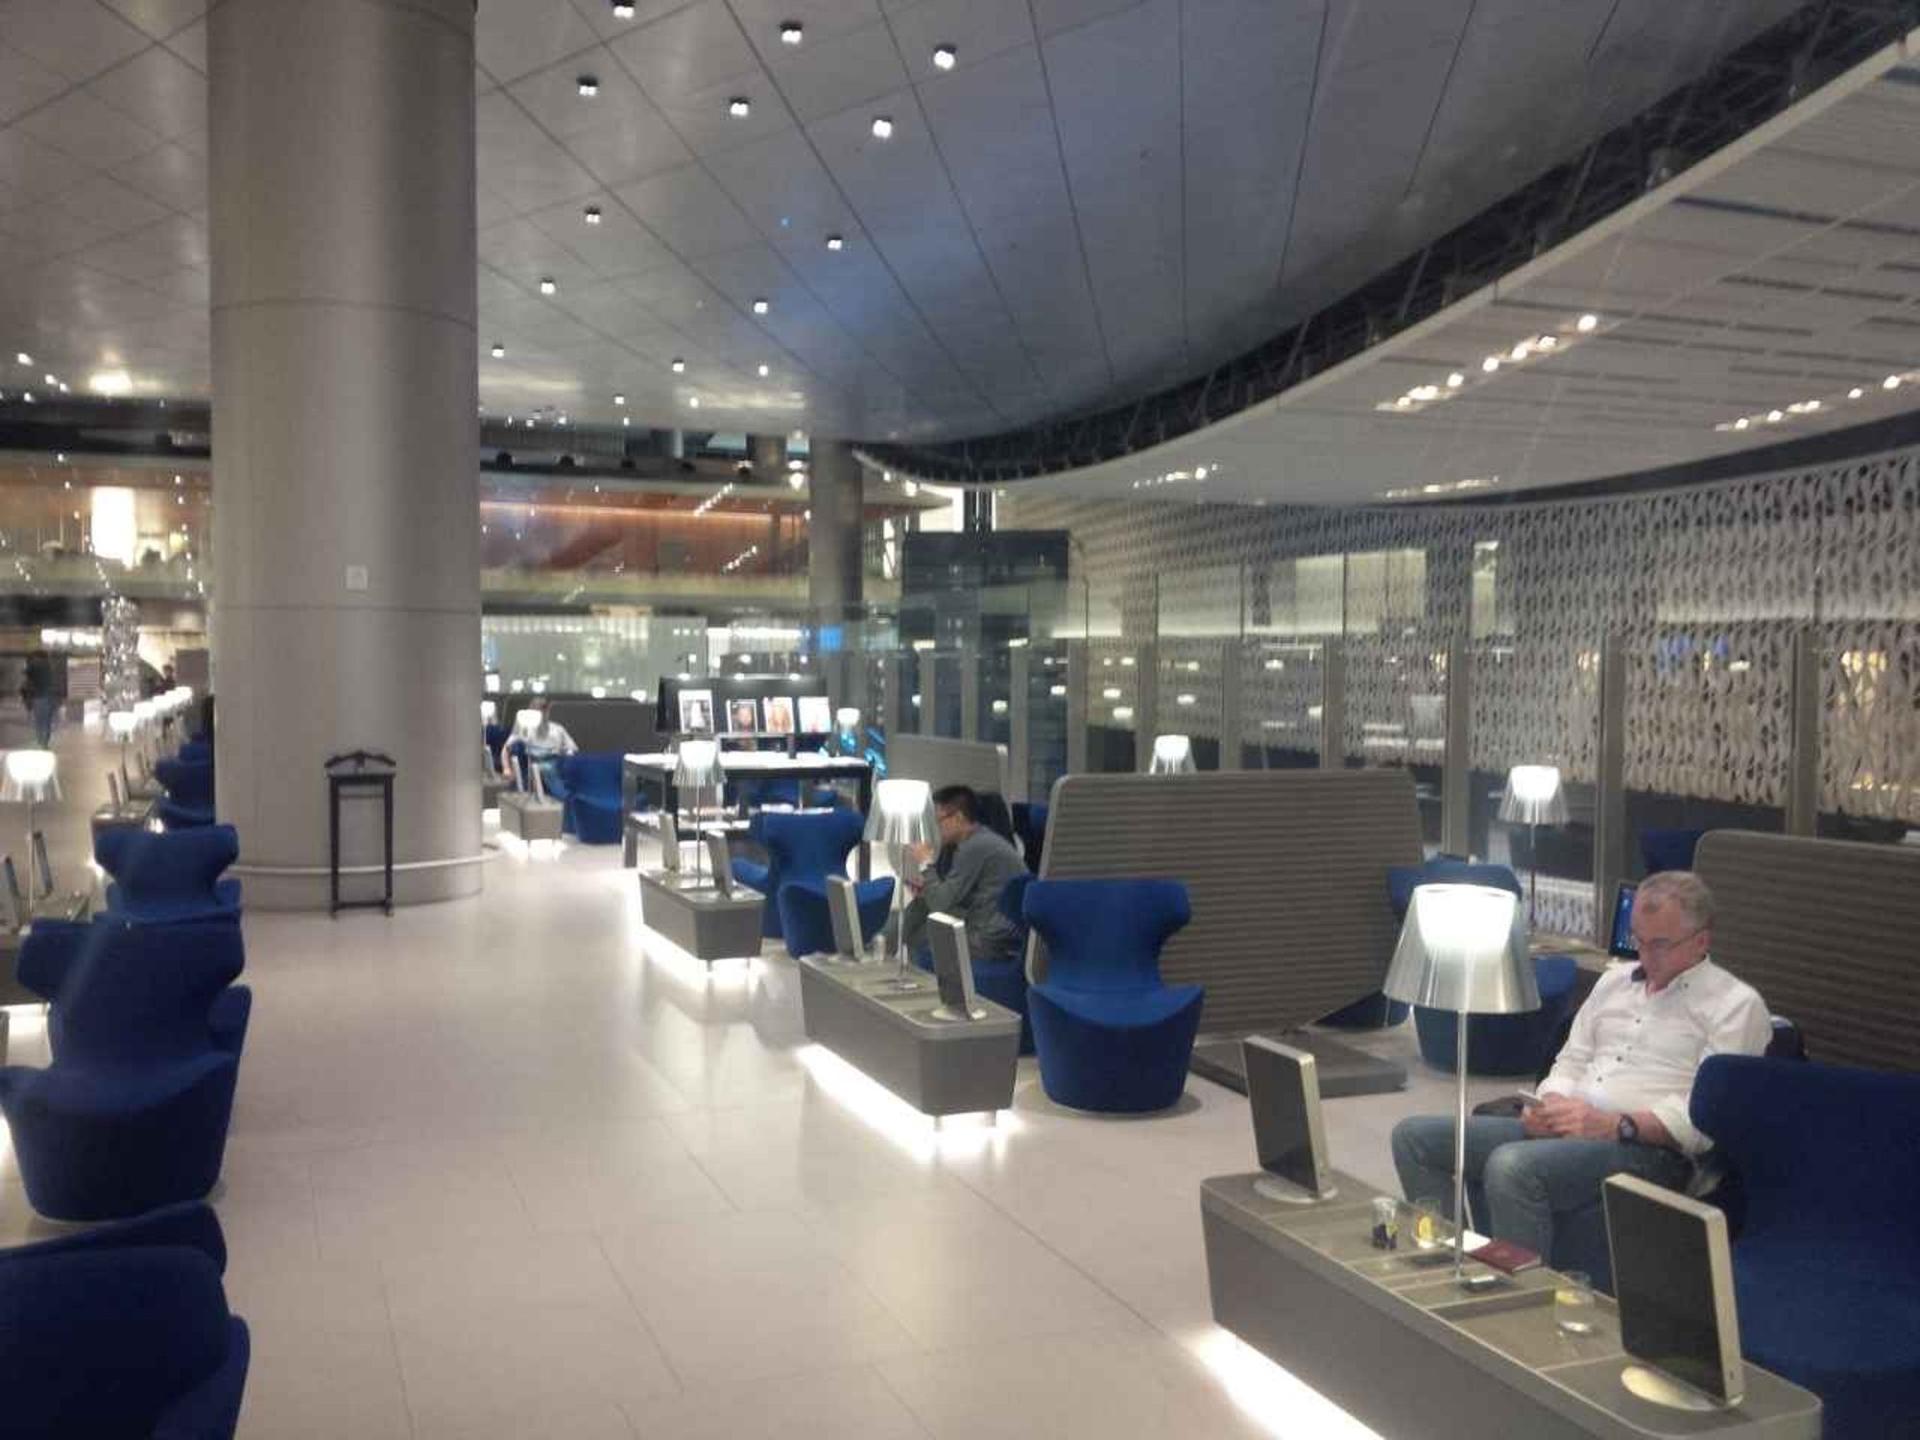 Qatar Airways Al Mourjan Business Class Lounge image 50 of 100